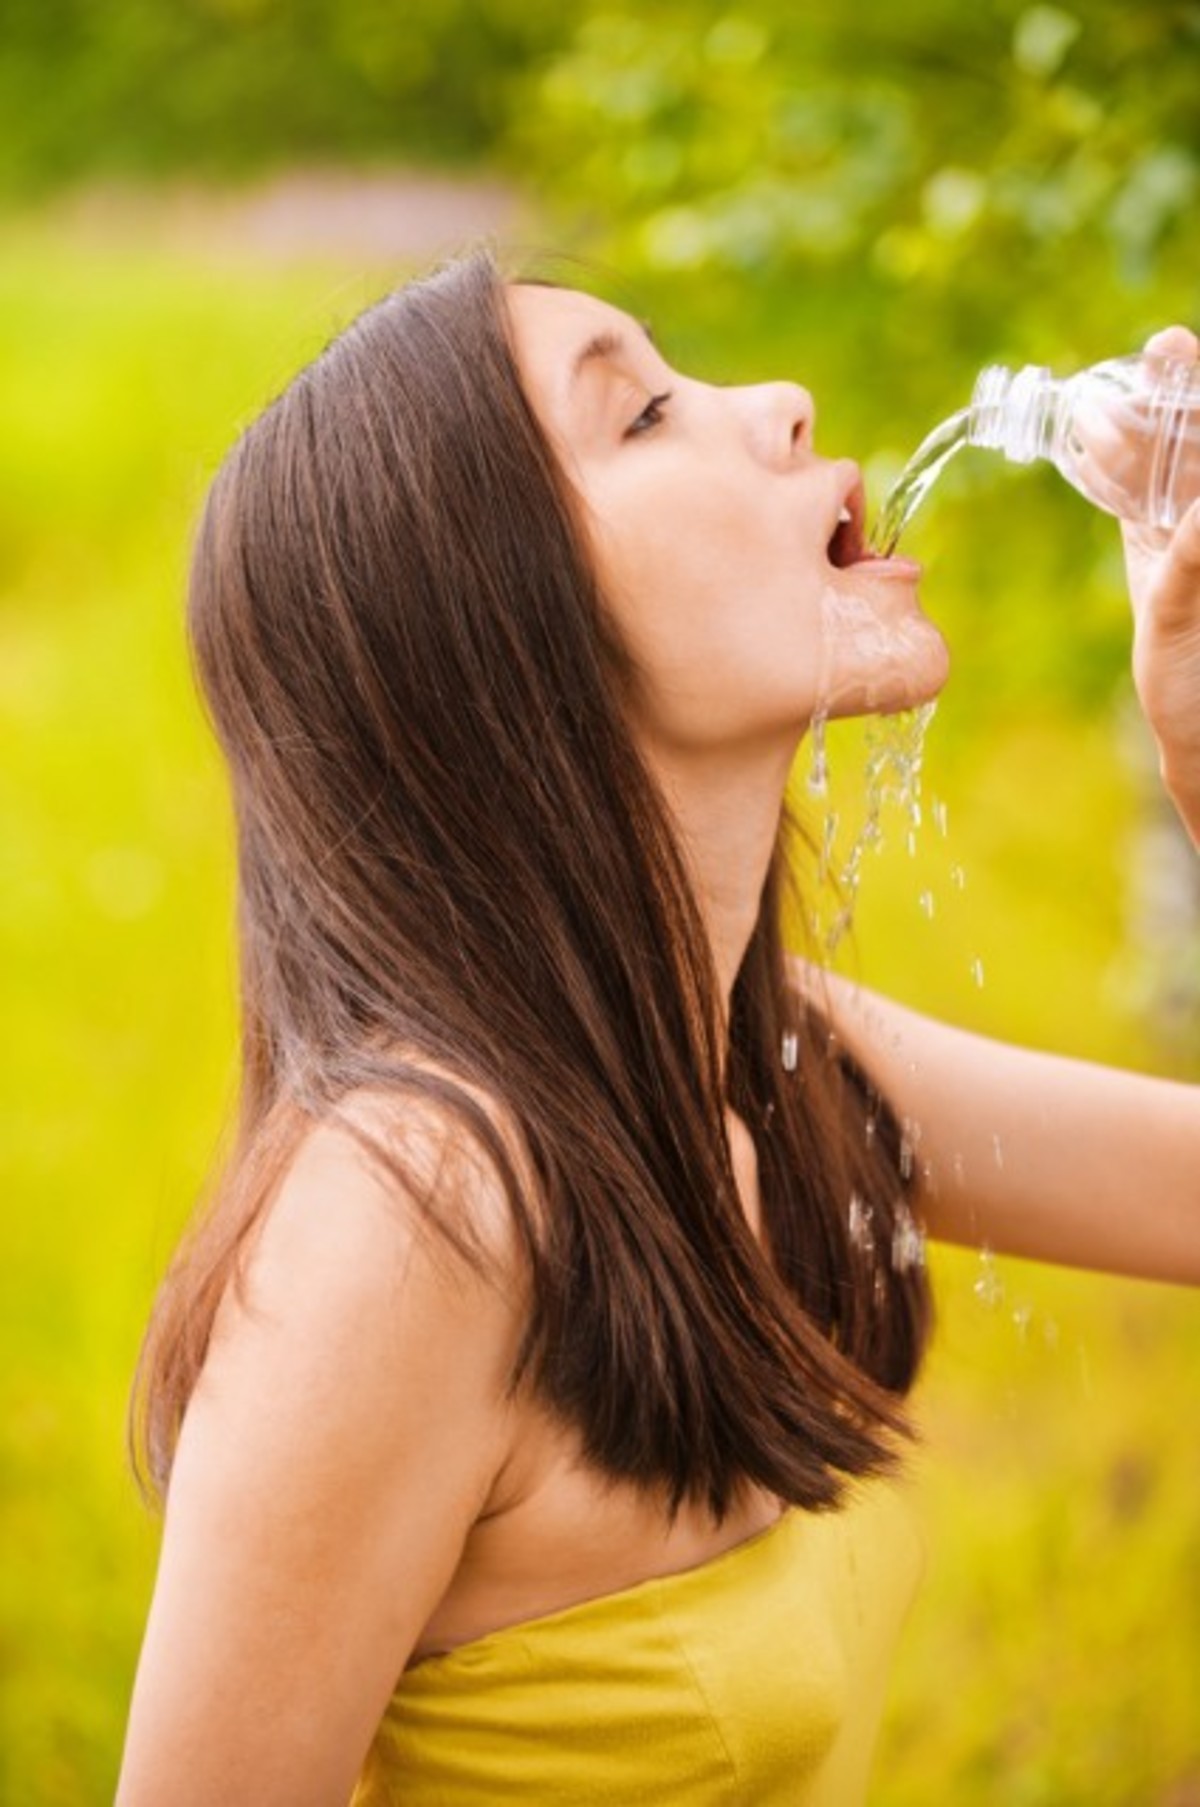 Бабам врот. Девушка пьет воду. Девушка жажда. Девочка пьет воду. Женщина вода.